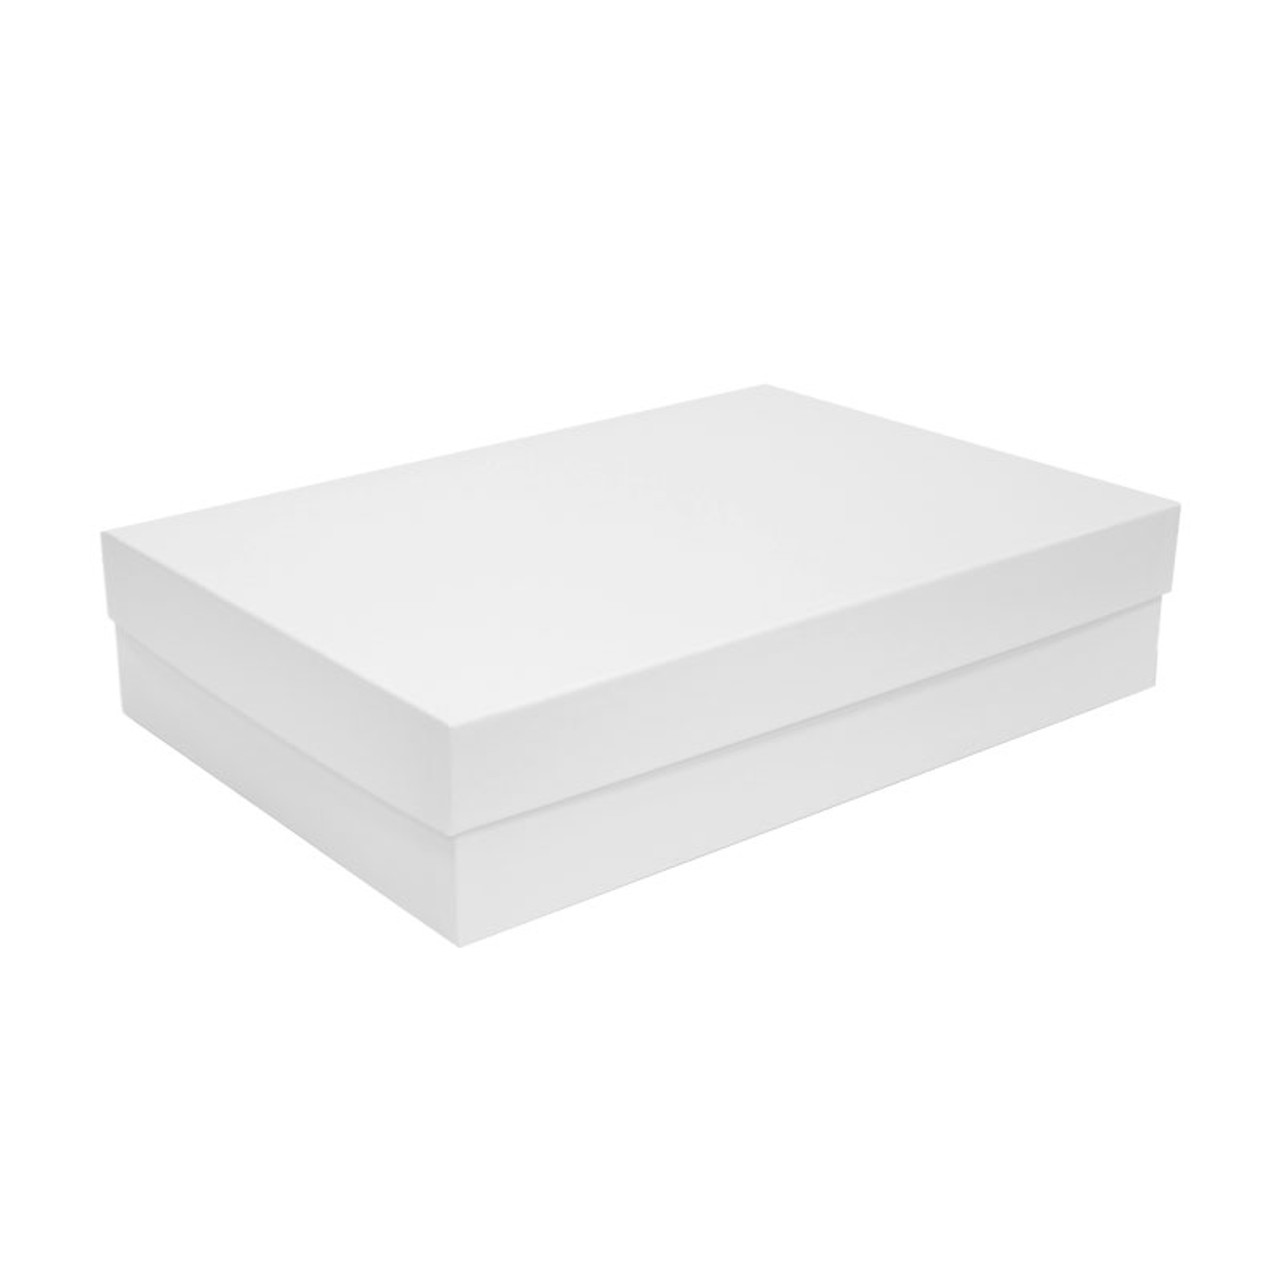 White Gloss Rectangular Rigid Box 12" x 9" x 2-1/2" - ea.